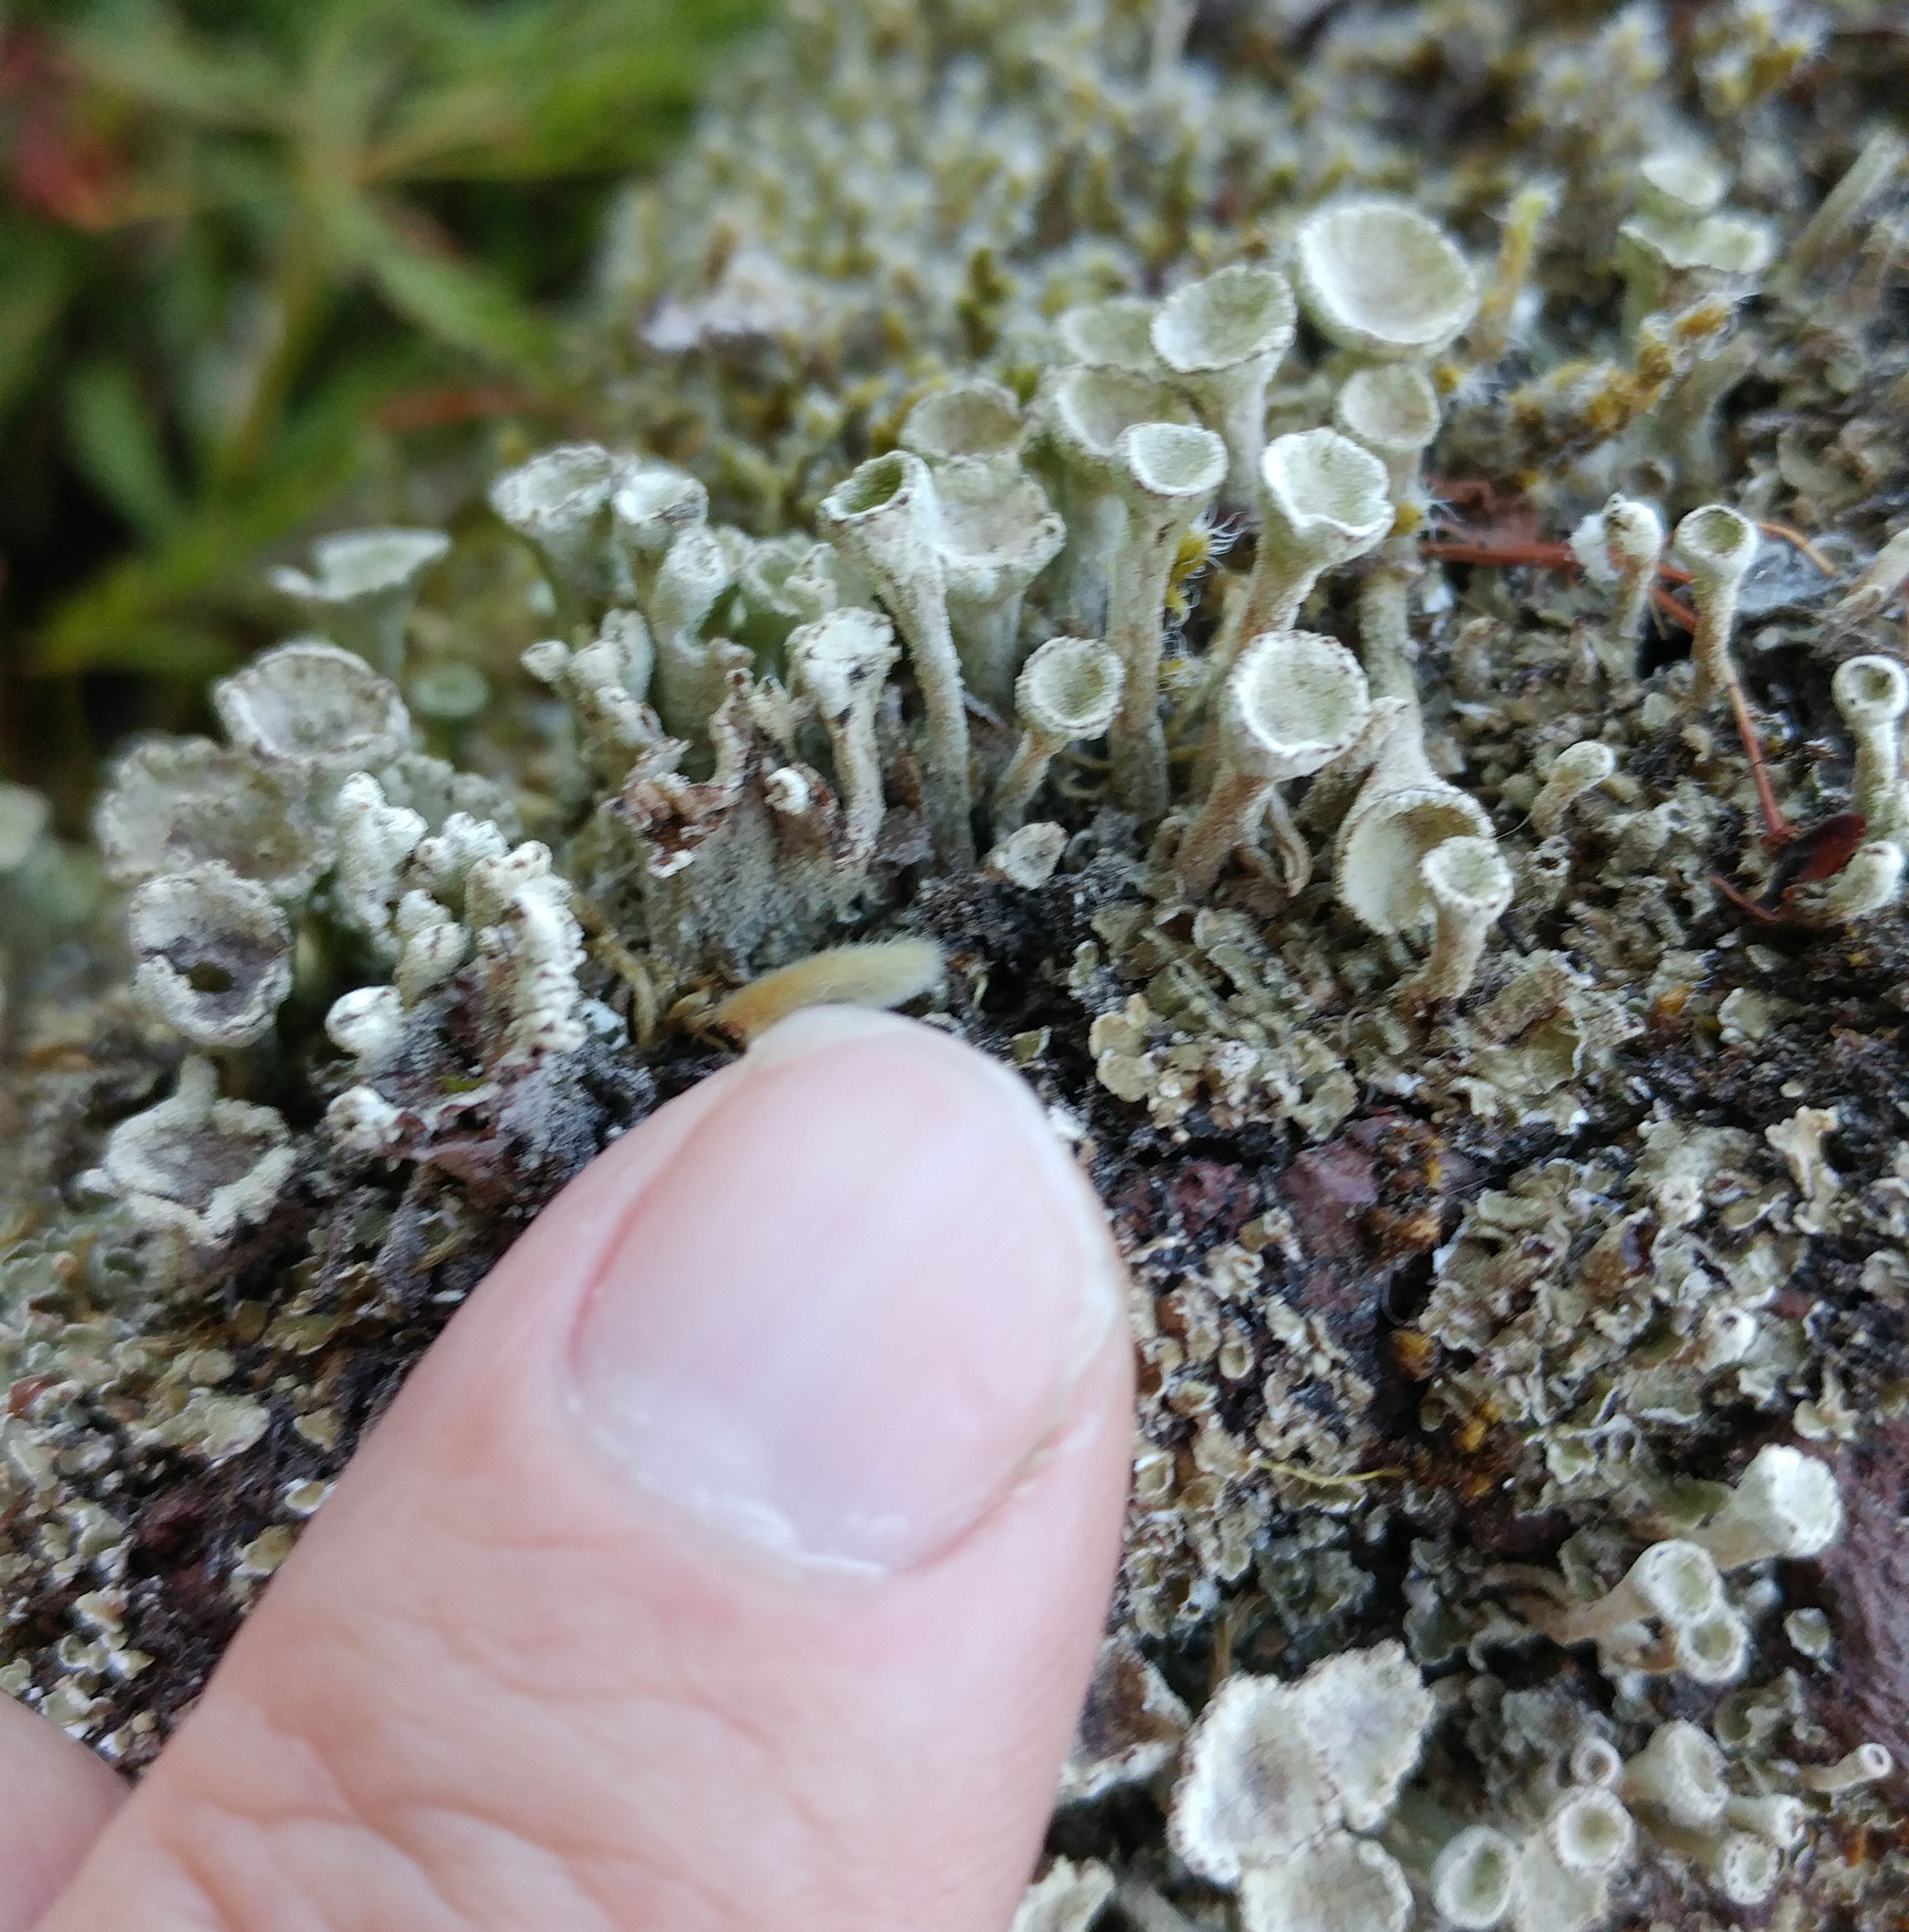 Lichen fruiting body